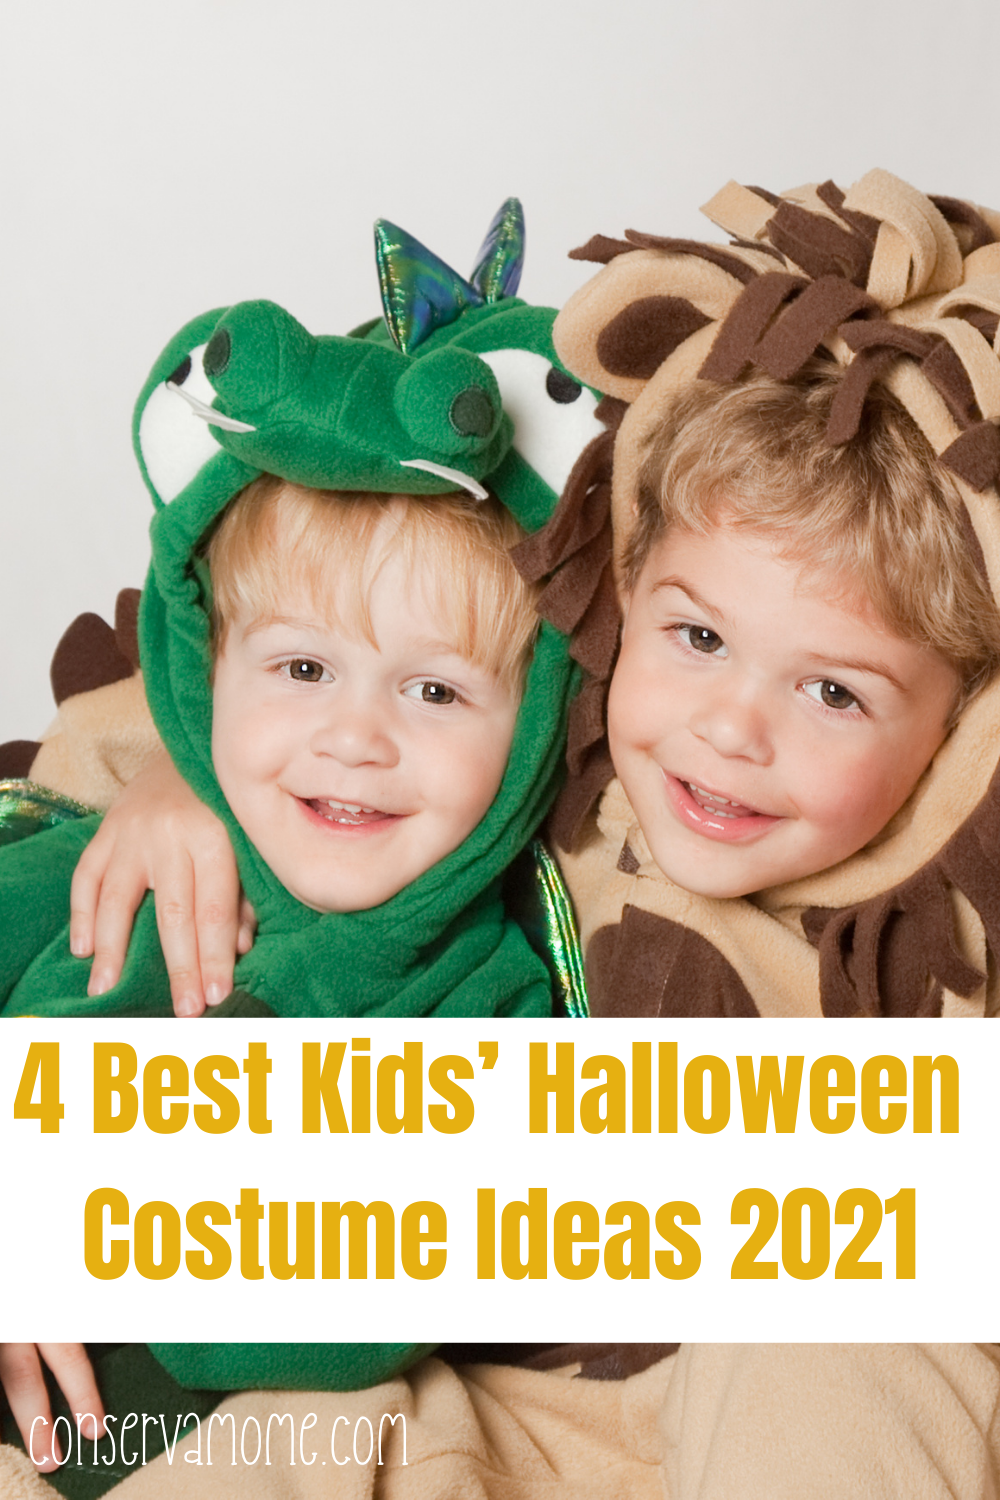 4 Best Kids' Halloween Costume Ideas 2021